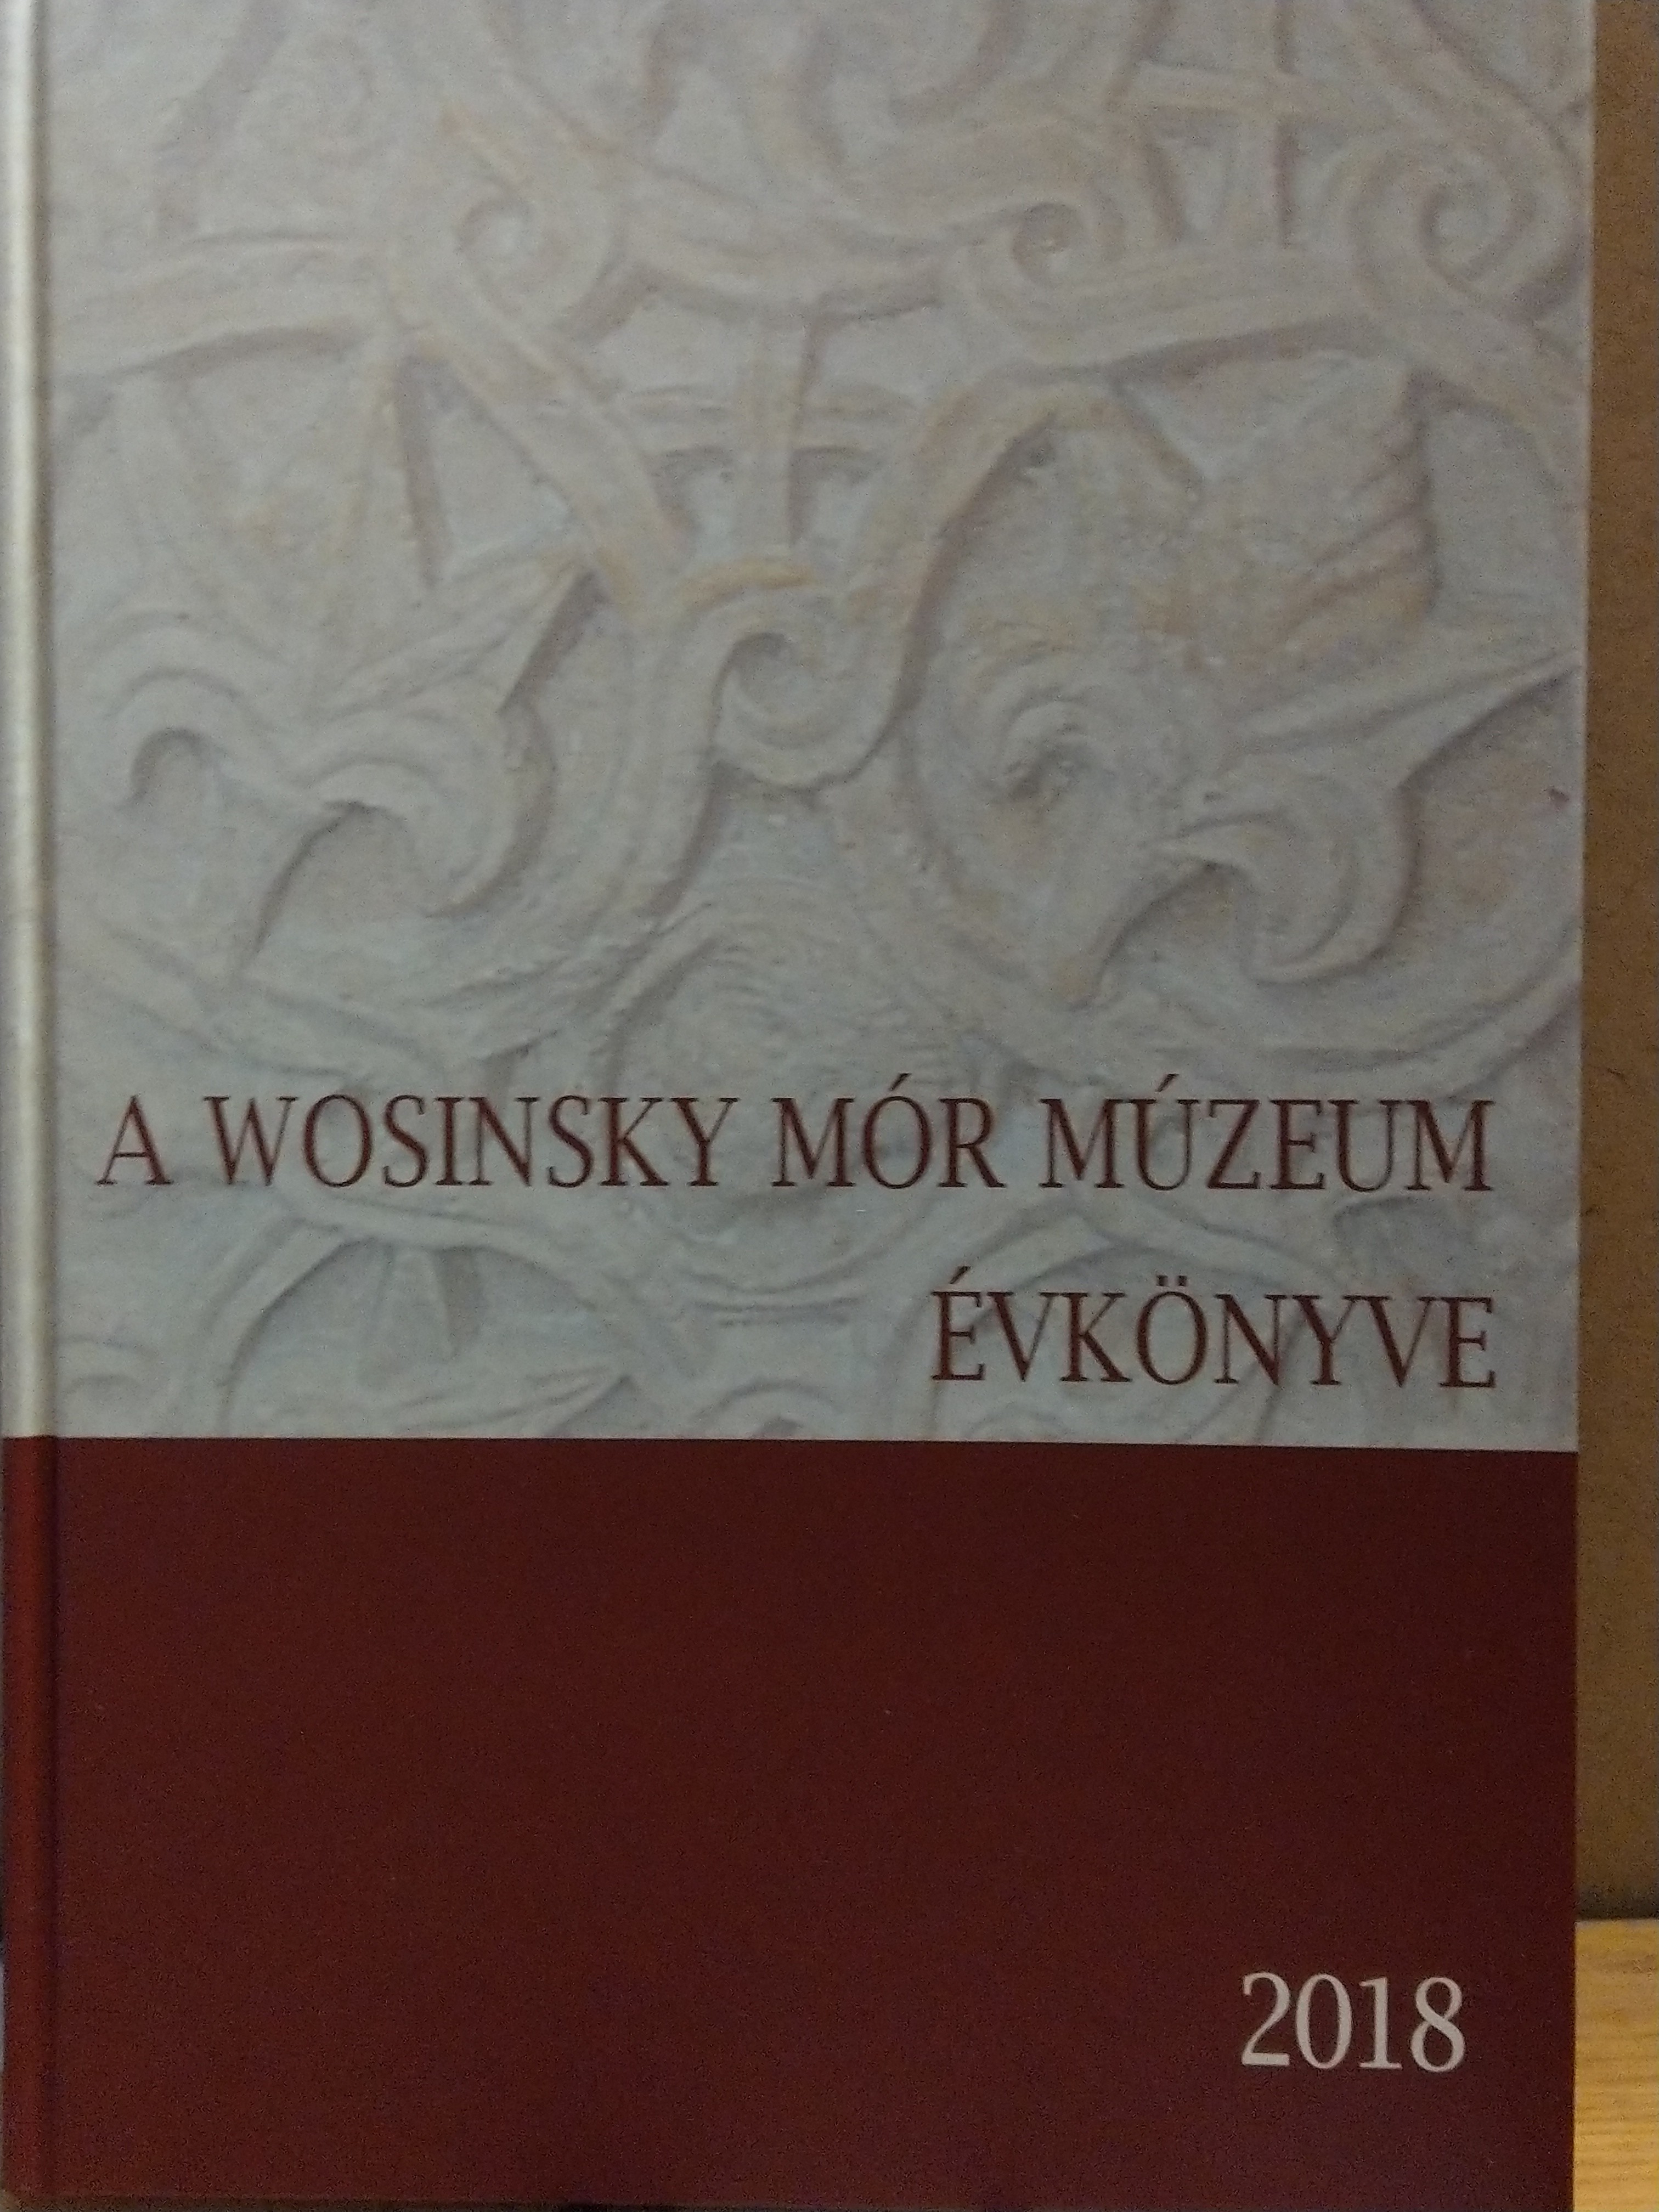 A Wosinsky Mór Múzeum évkönyve 2018/40. (Rippl-Rónai Múzeum CC BY-NC-ND)